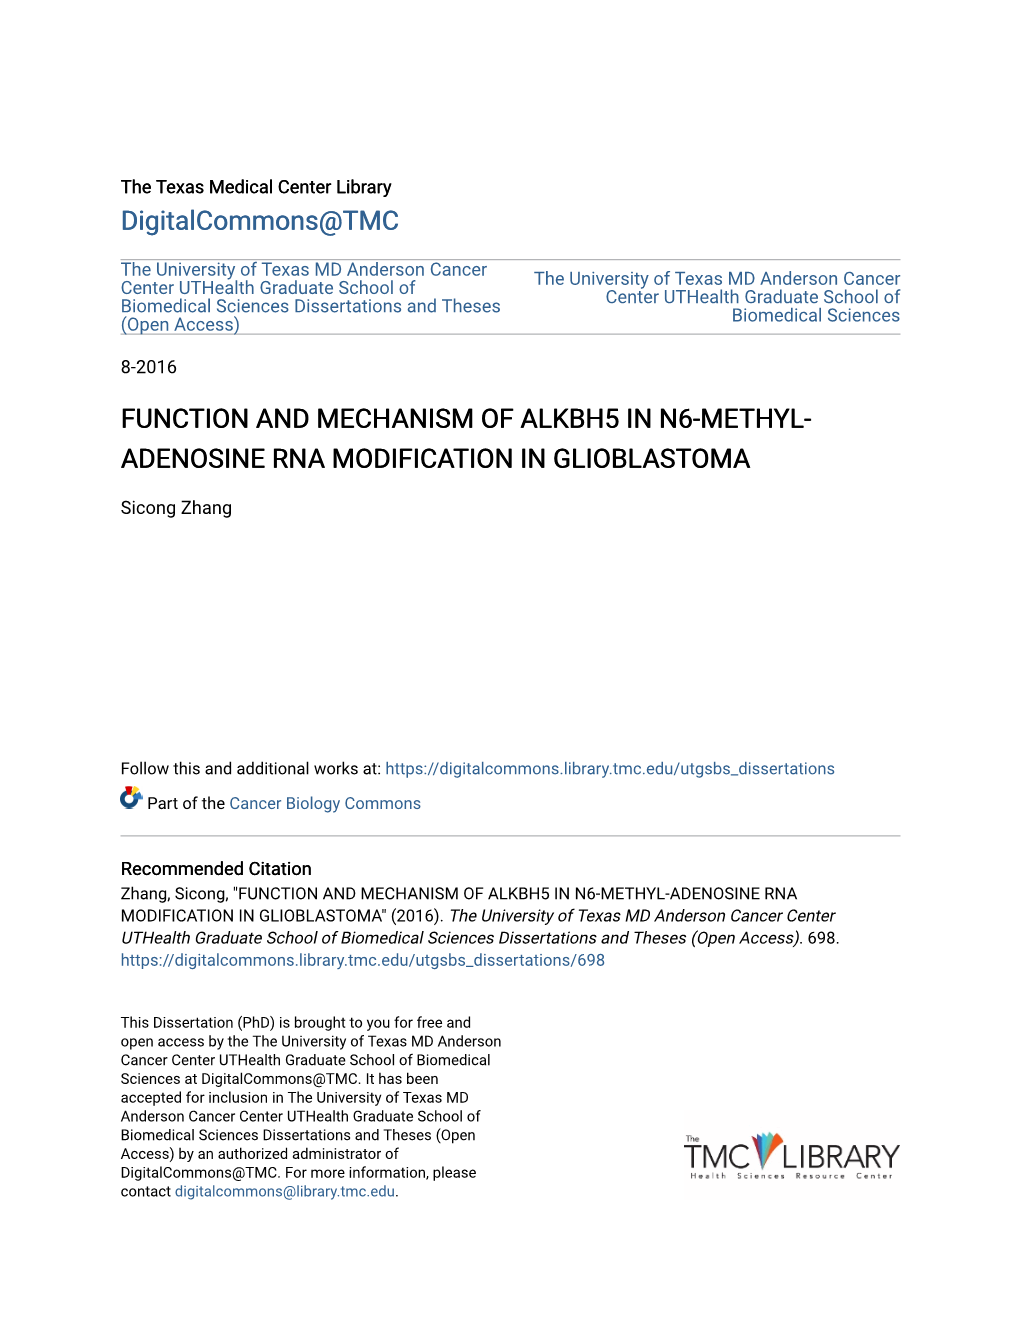 Function and Mechanism of Alkbh5 in N6-Methyl- Adenosine Rna Modification in Glioblastoma